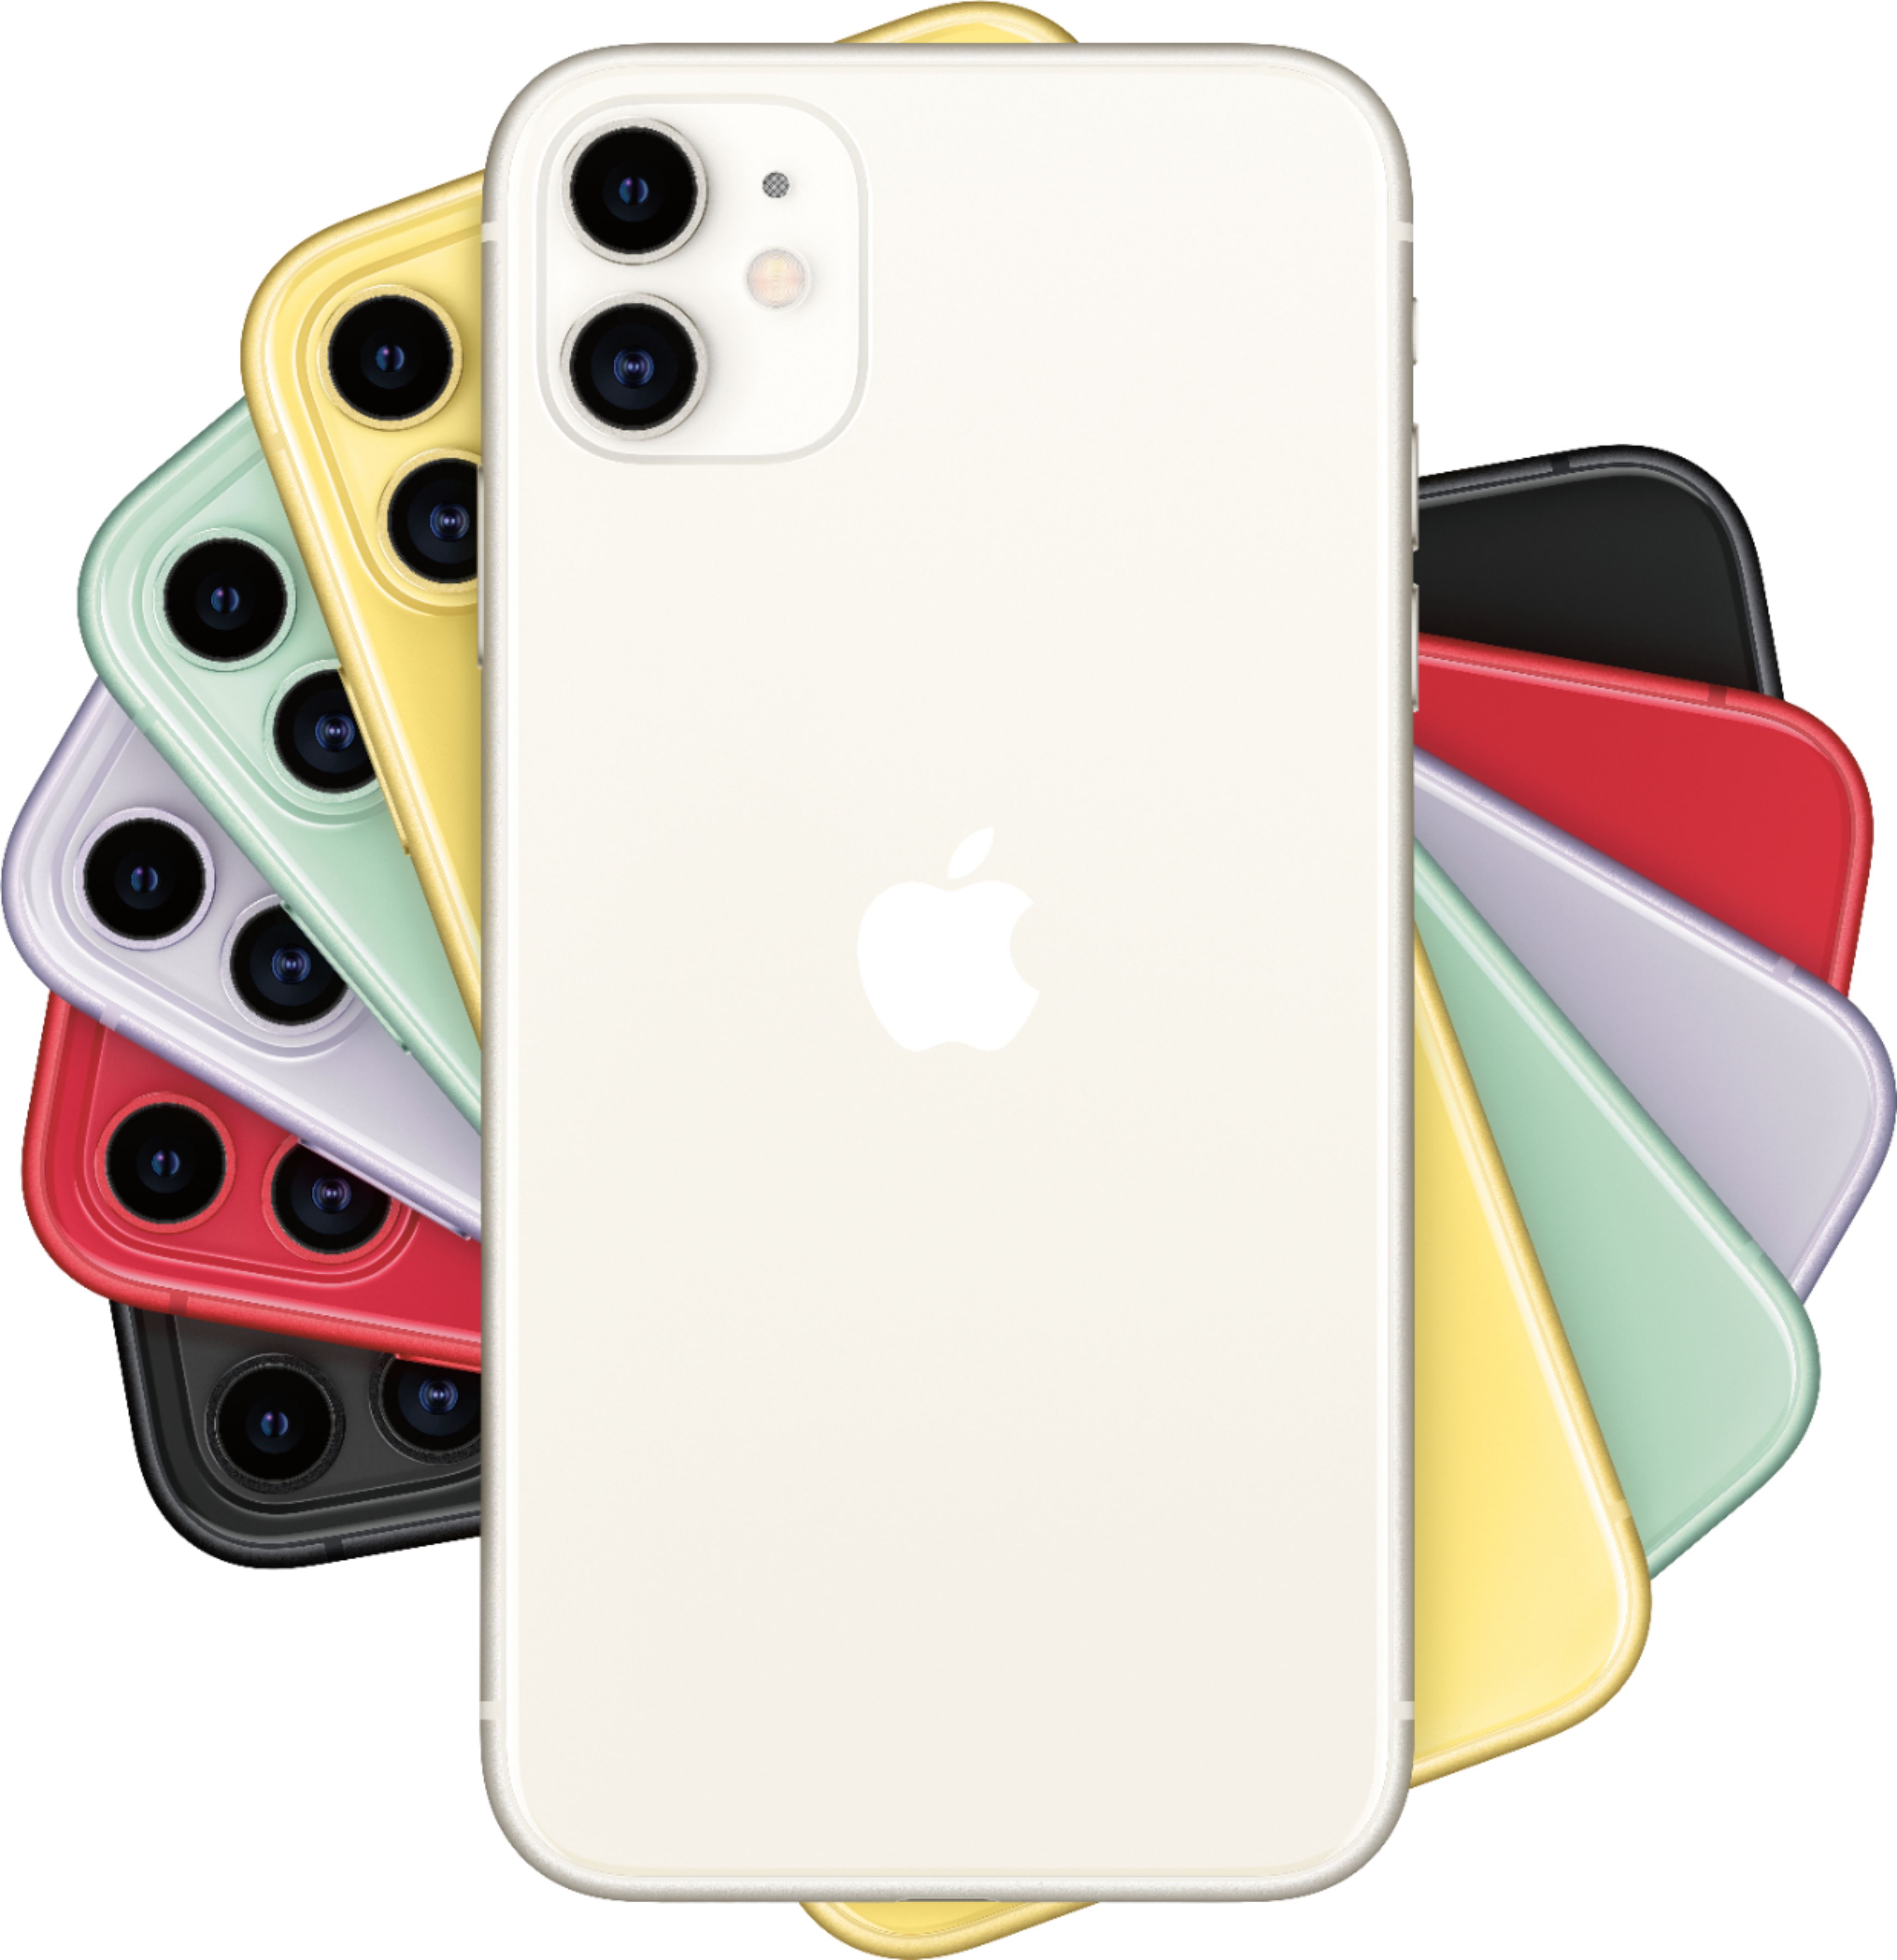 Apple iPhone 11 128GB White (Unlocked) MWKV2LL/A - Best Buy